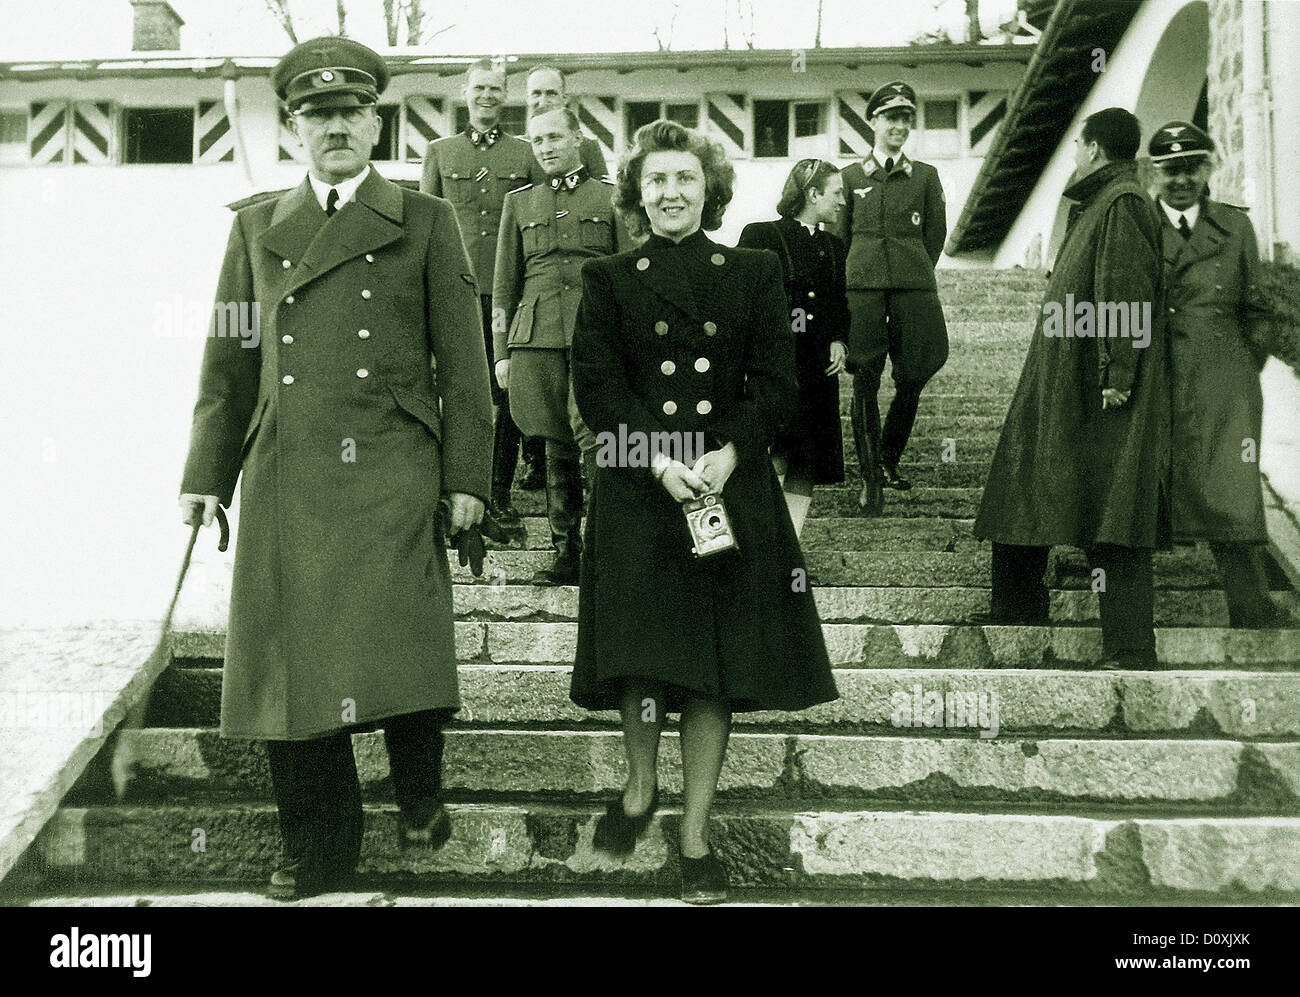 Eva Braun, Braun, Adolf Hitler, architect, Albert Speer, military, staff, Berghof, box camera, Berchtesgaden, Germany, 1940, Wor Stock Photo